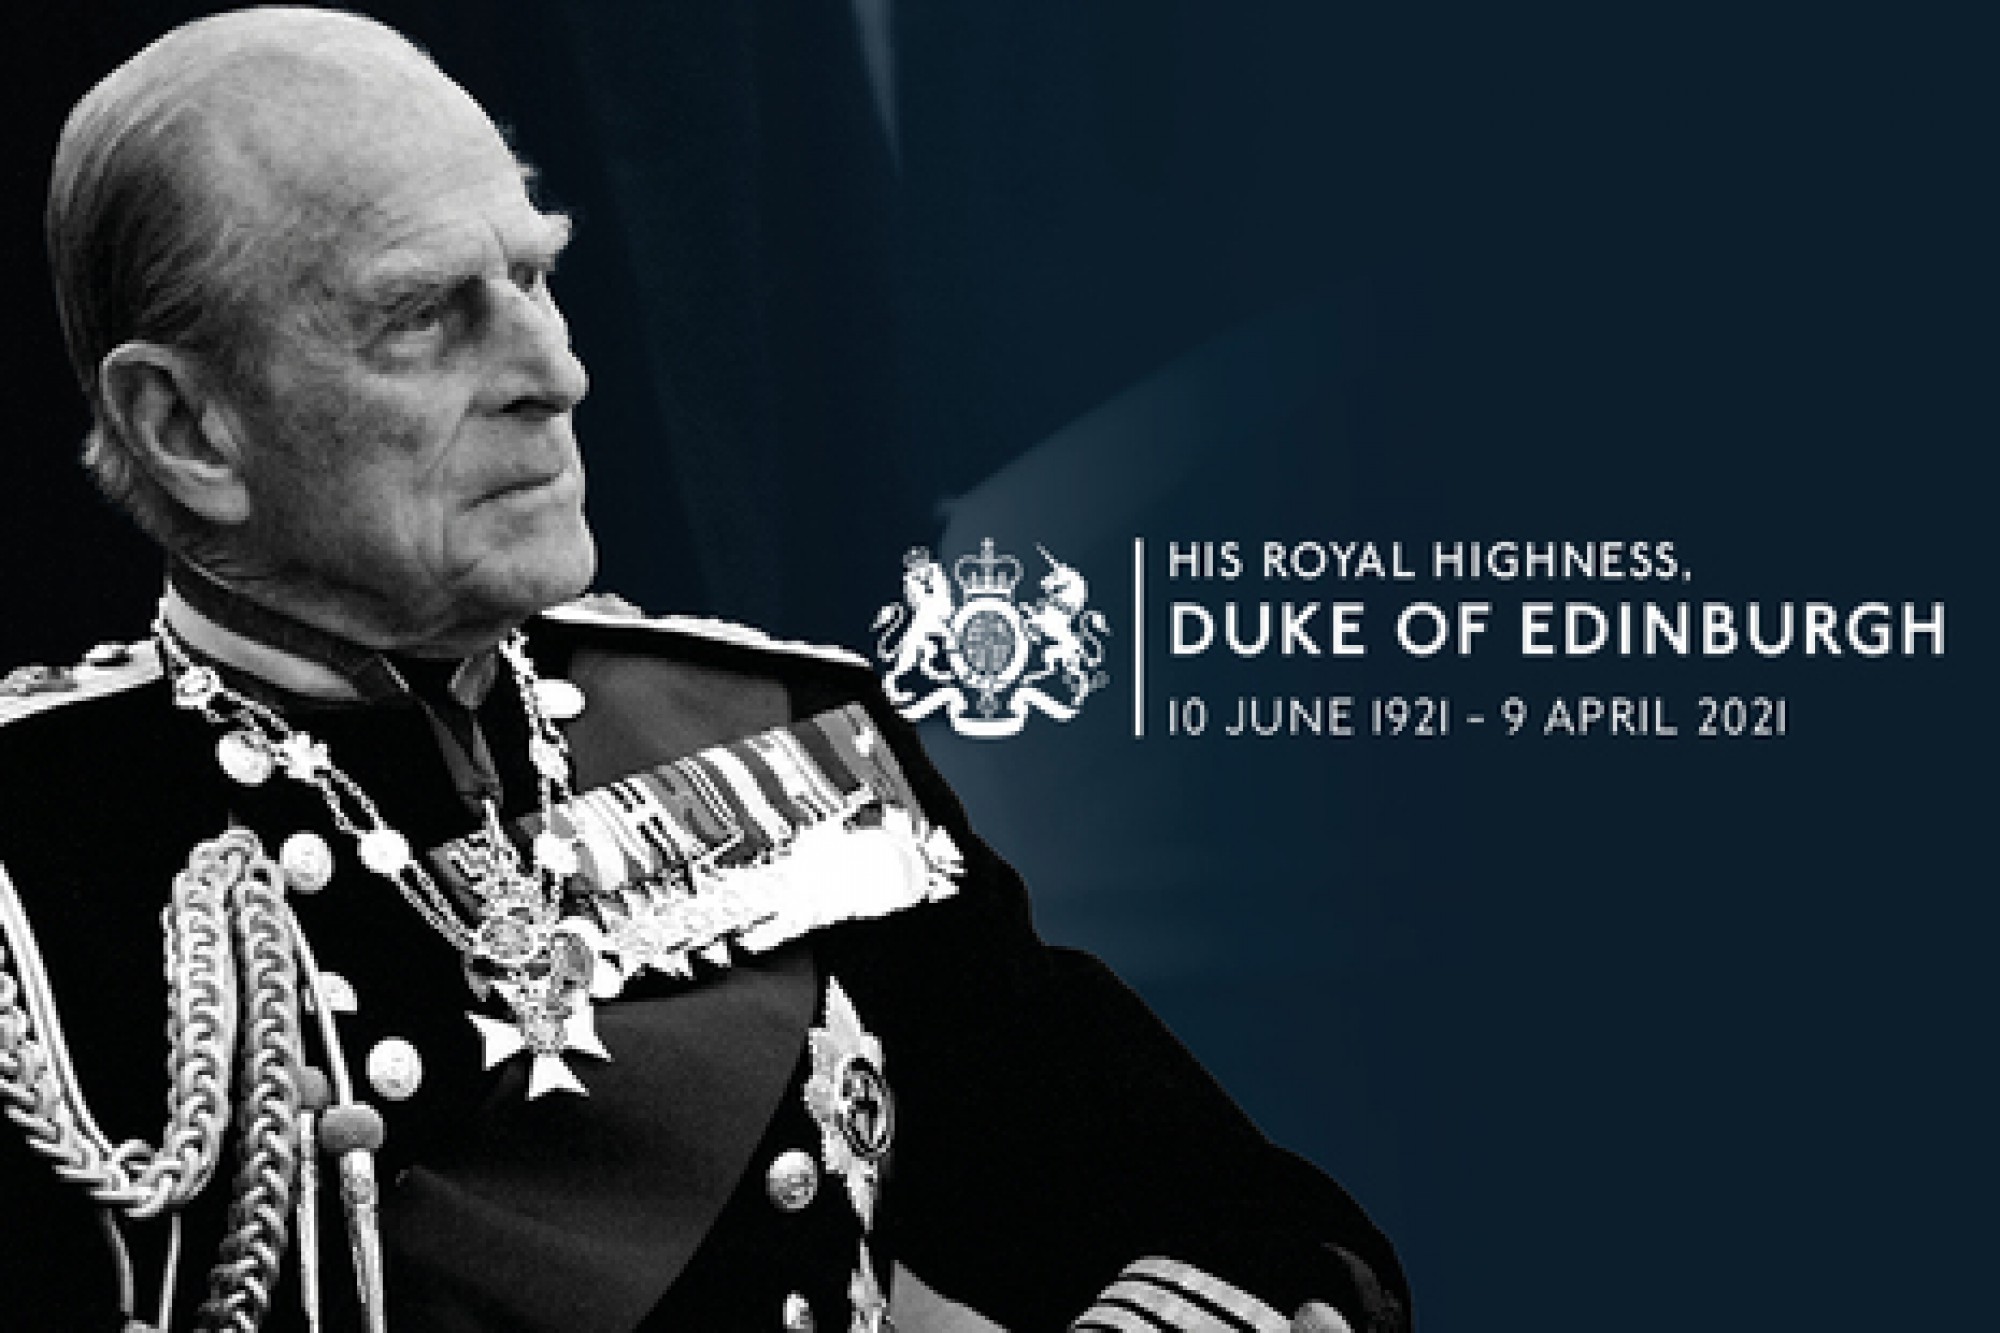 National silence to mark the death of HRH The Duke of Edinburgh